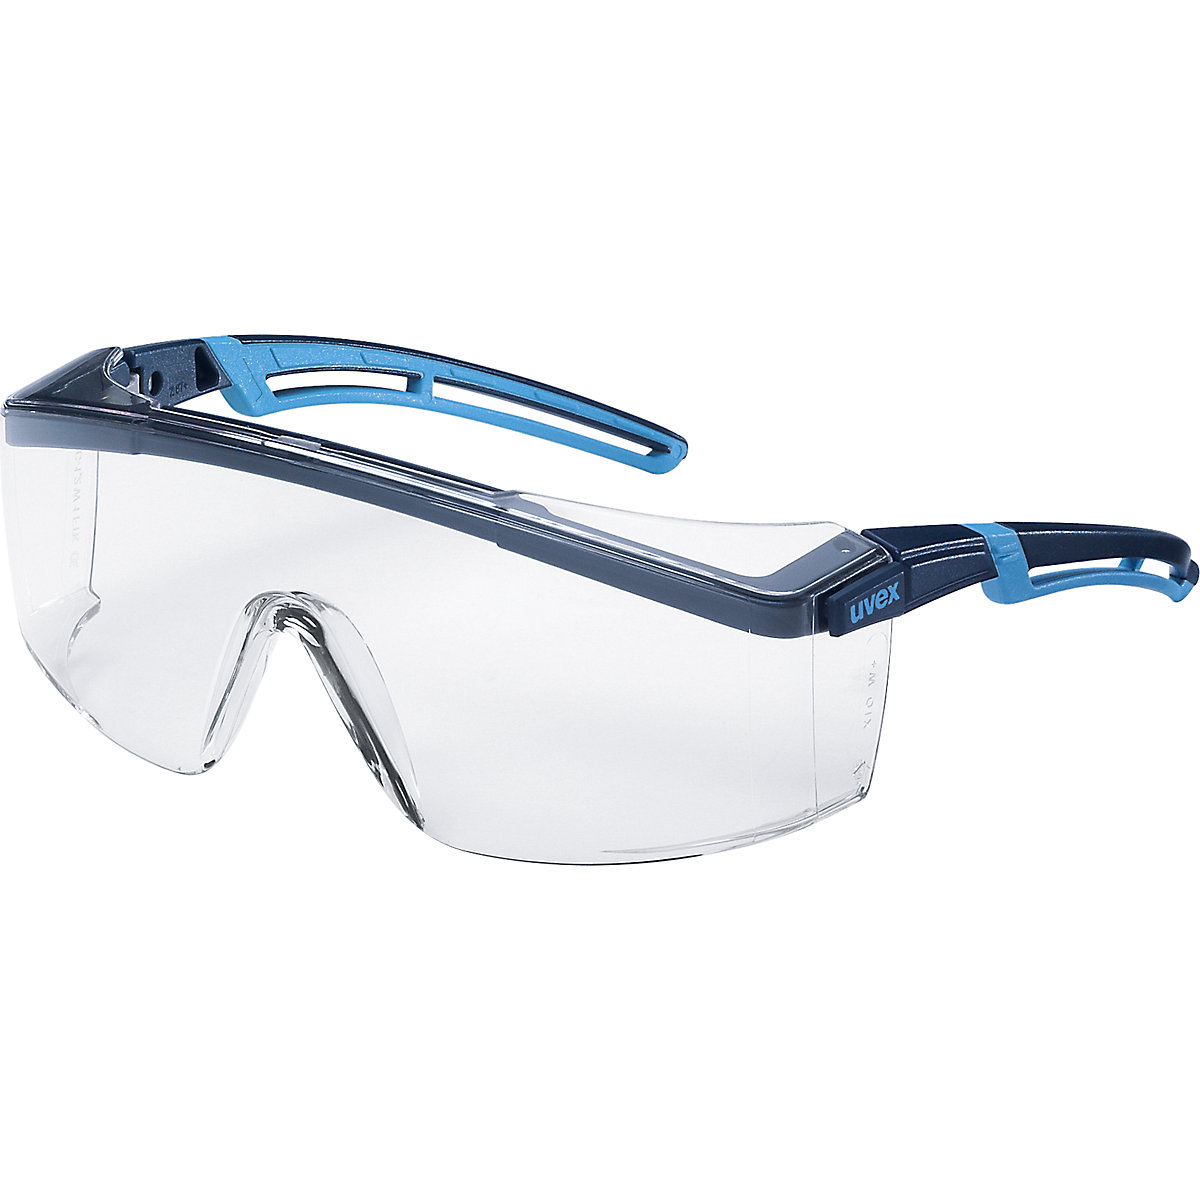 atrospec 2.0 safety spectacles – Uvex